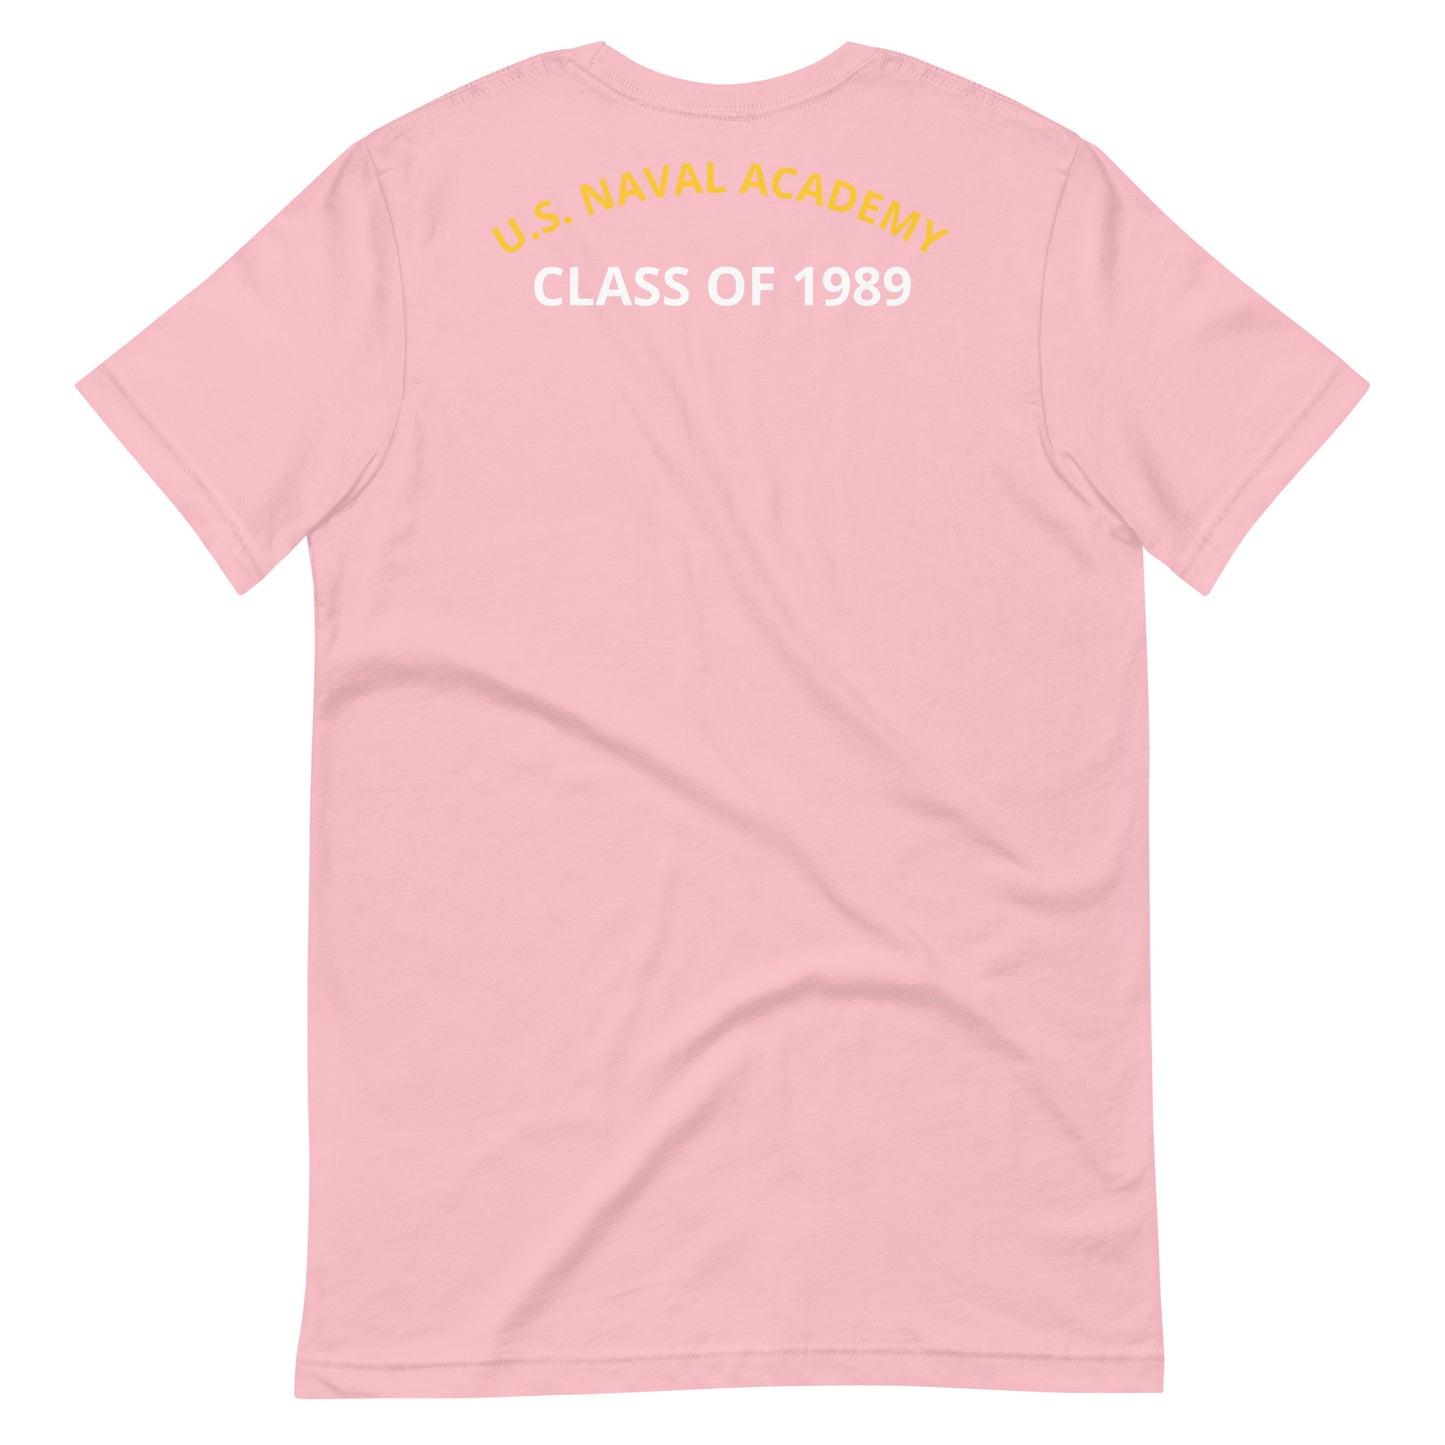 Class of 89 Tee